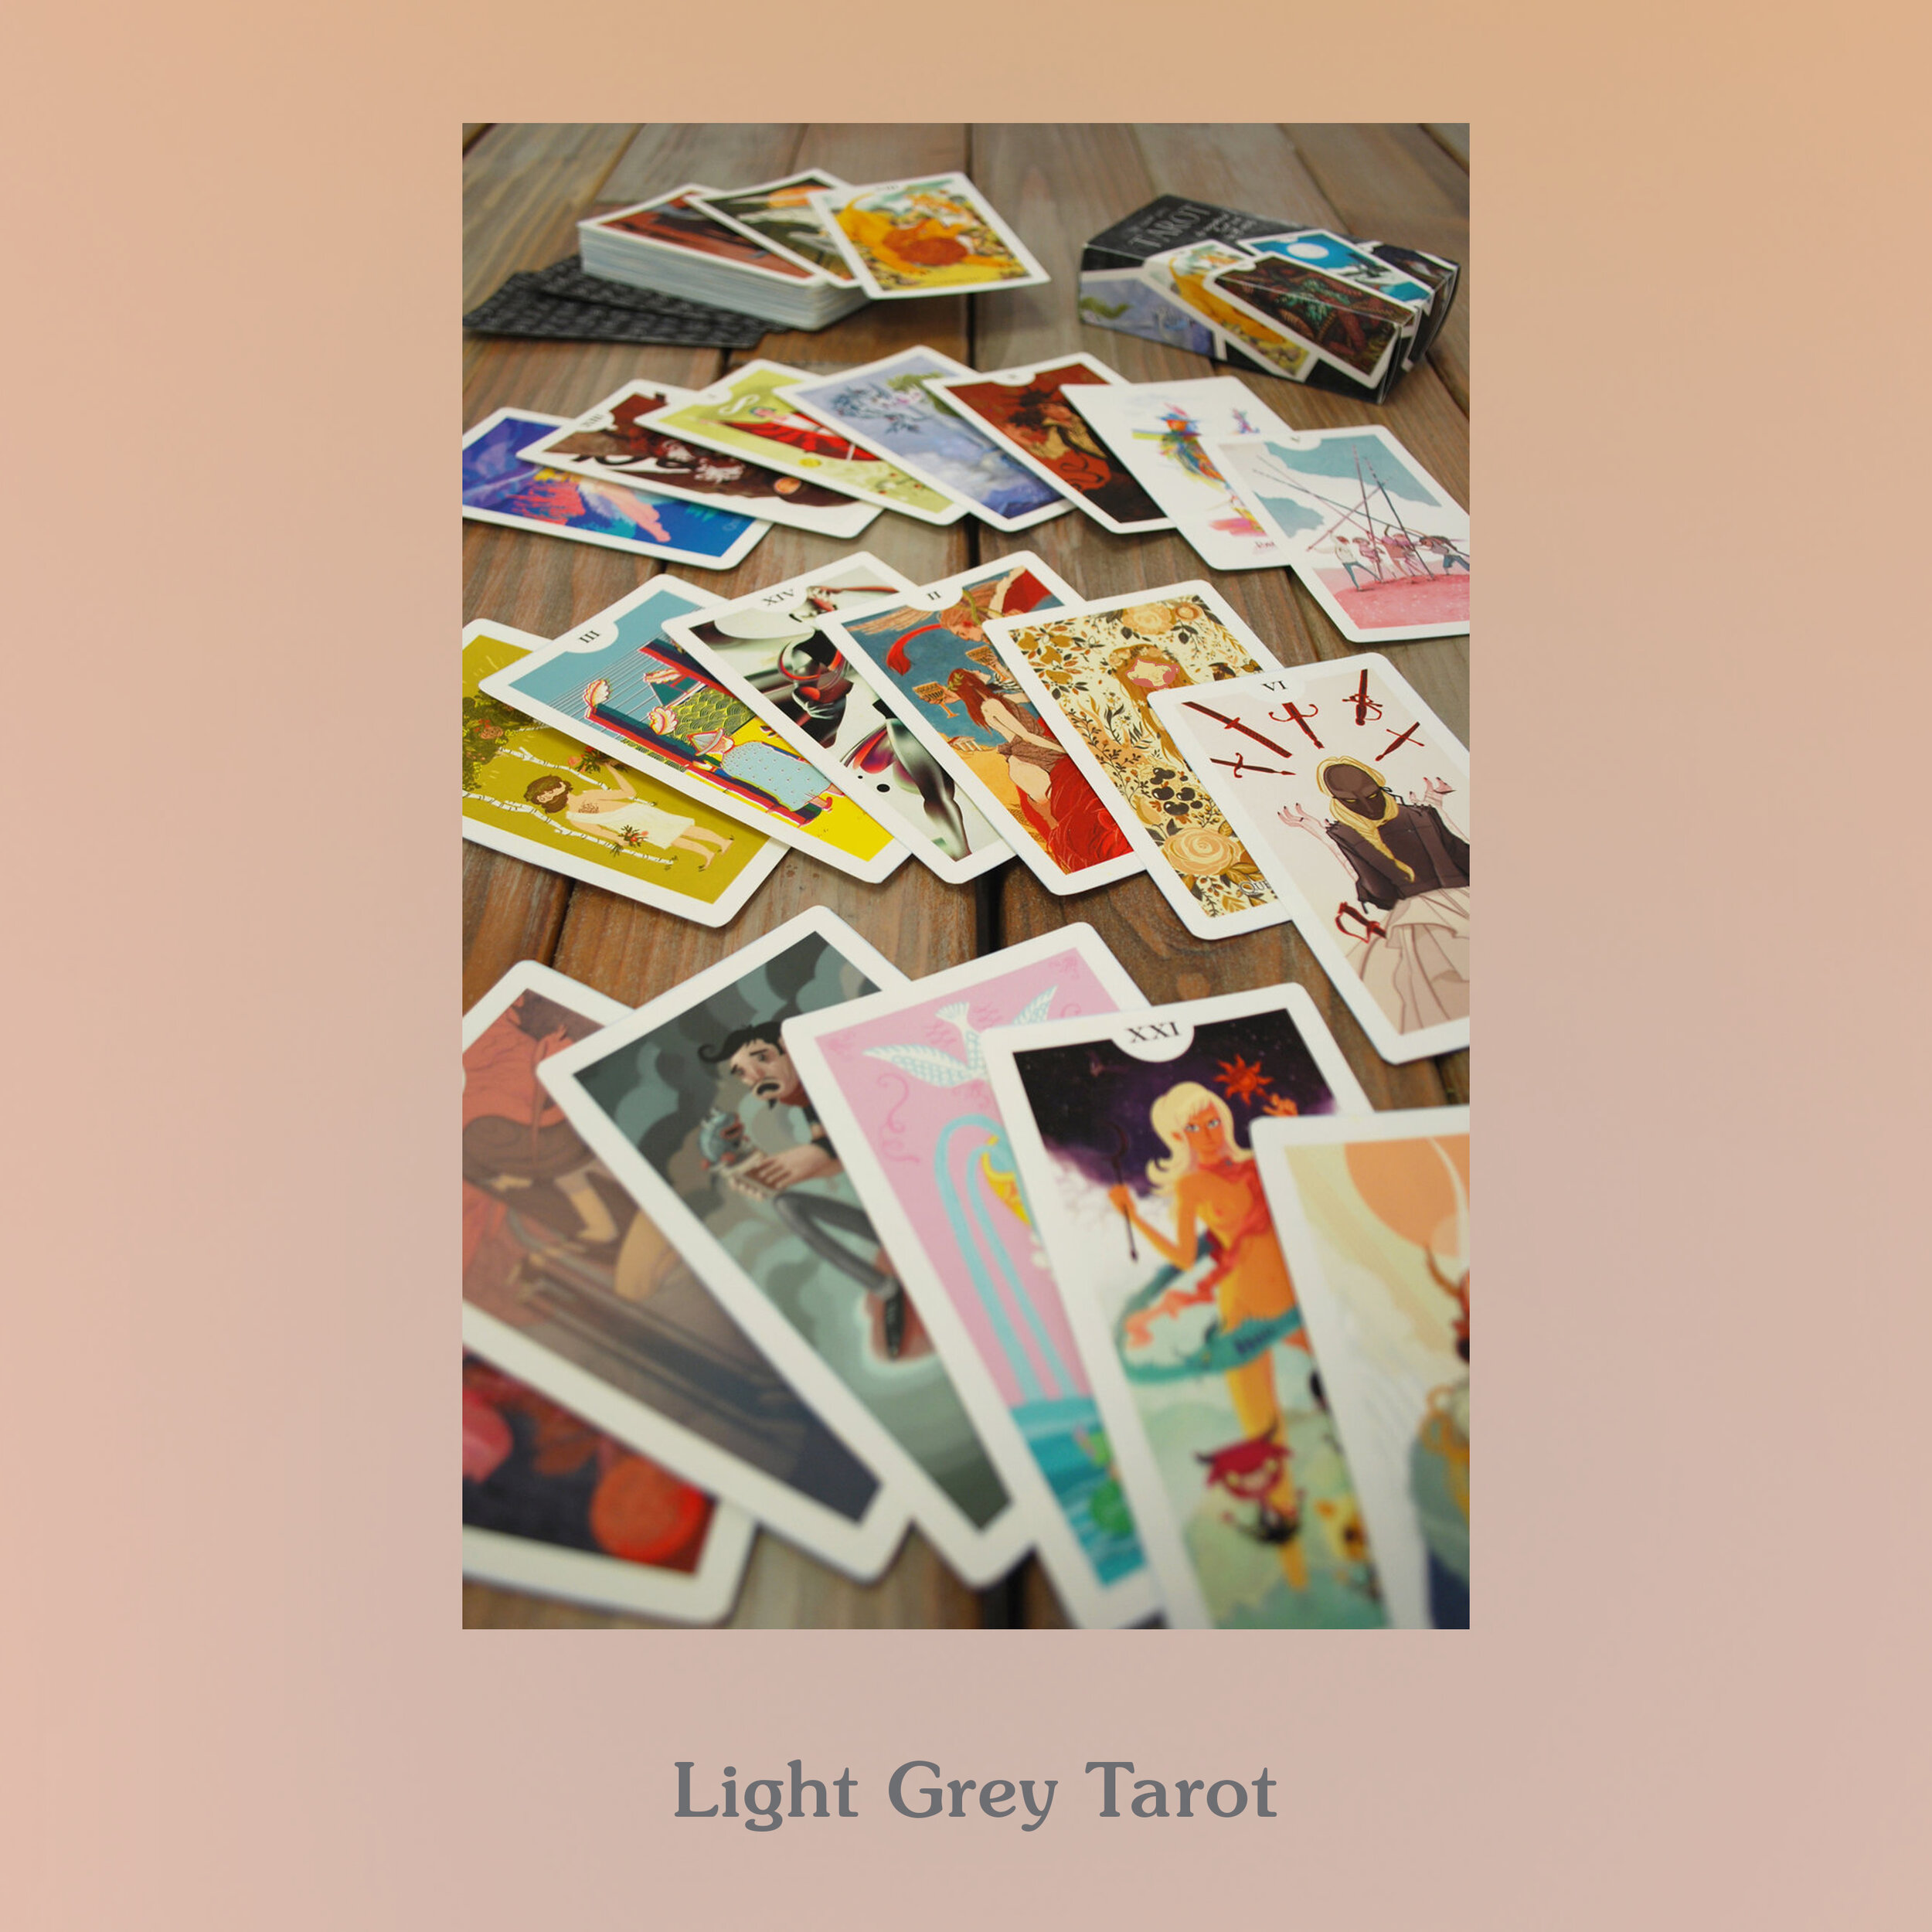 Light Grey Tarot